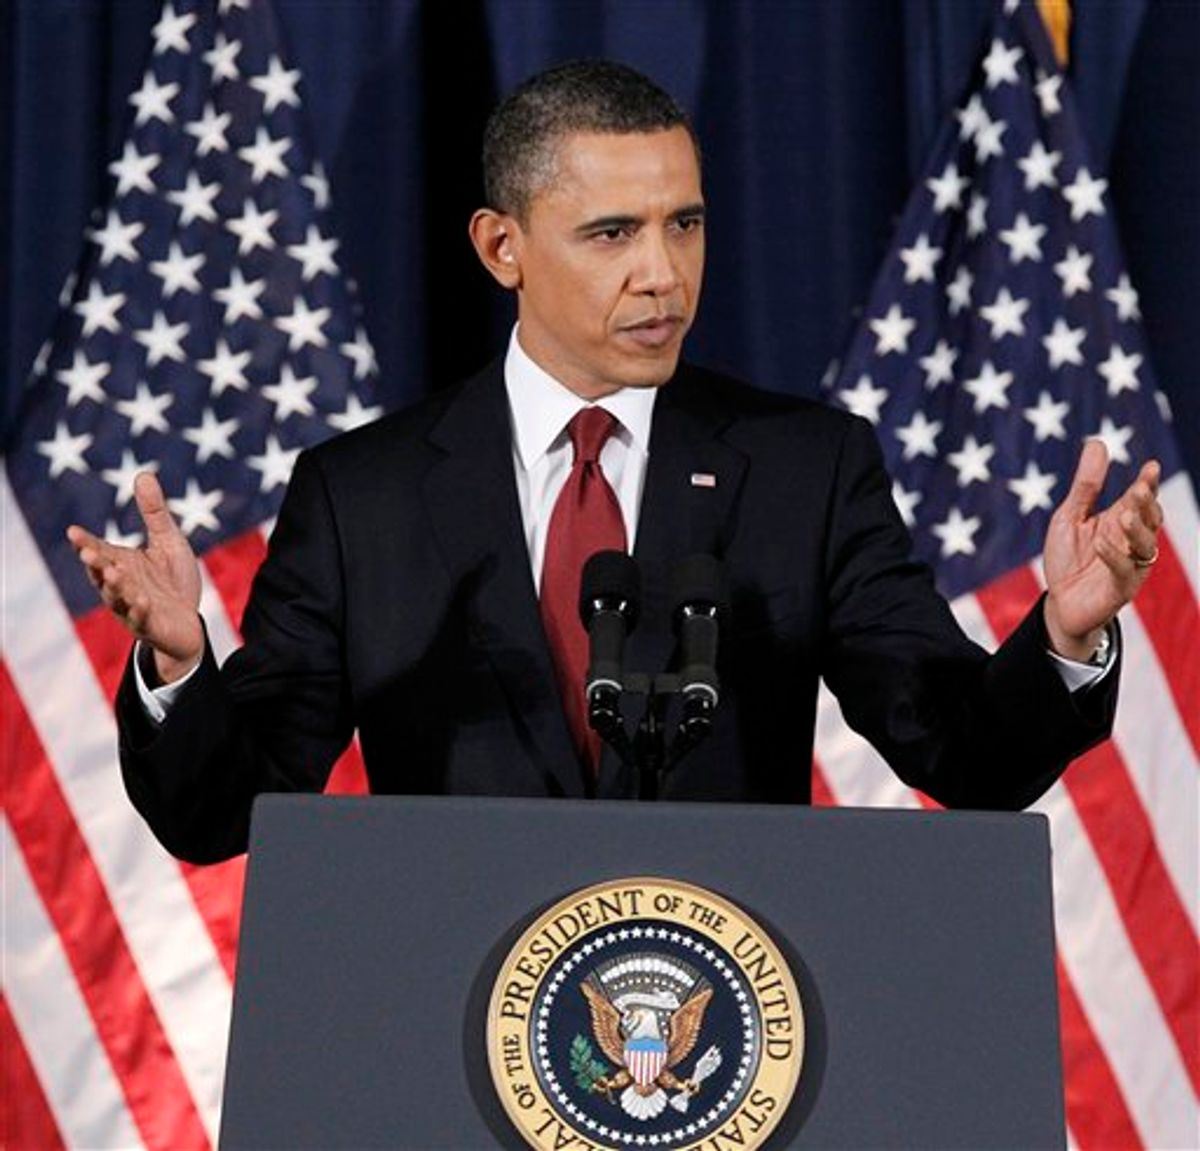 President Barack Obama delivers his address on Libya at the National Defense University in Washington, Monday, March 28, 2011.   (AP Photo/Manuel Balce Ceneta) (AP)